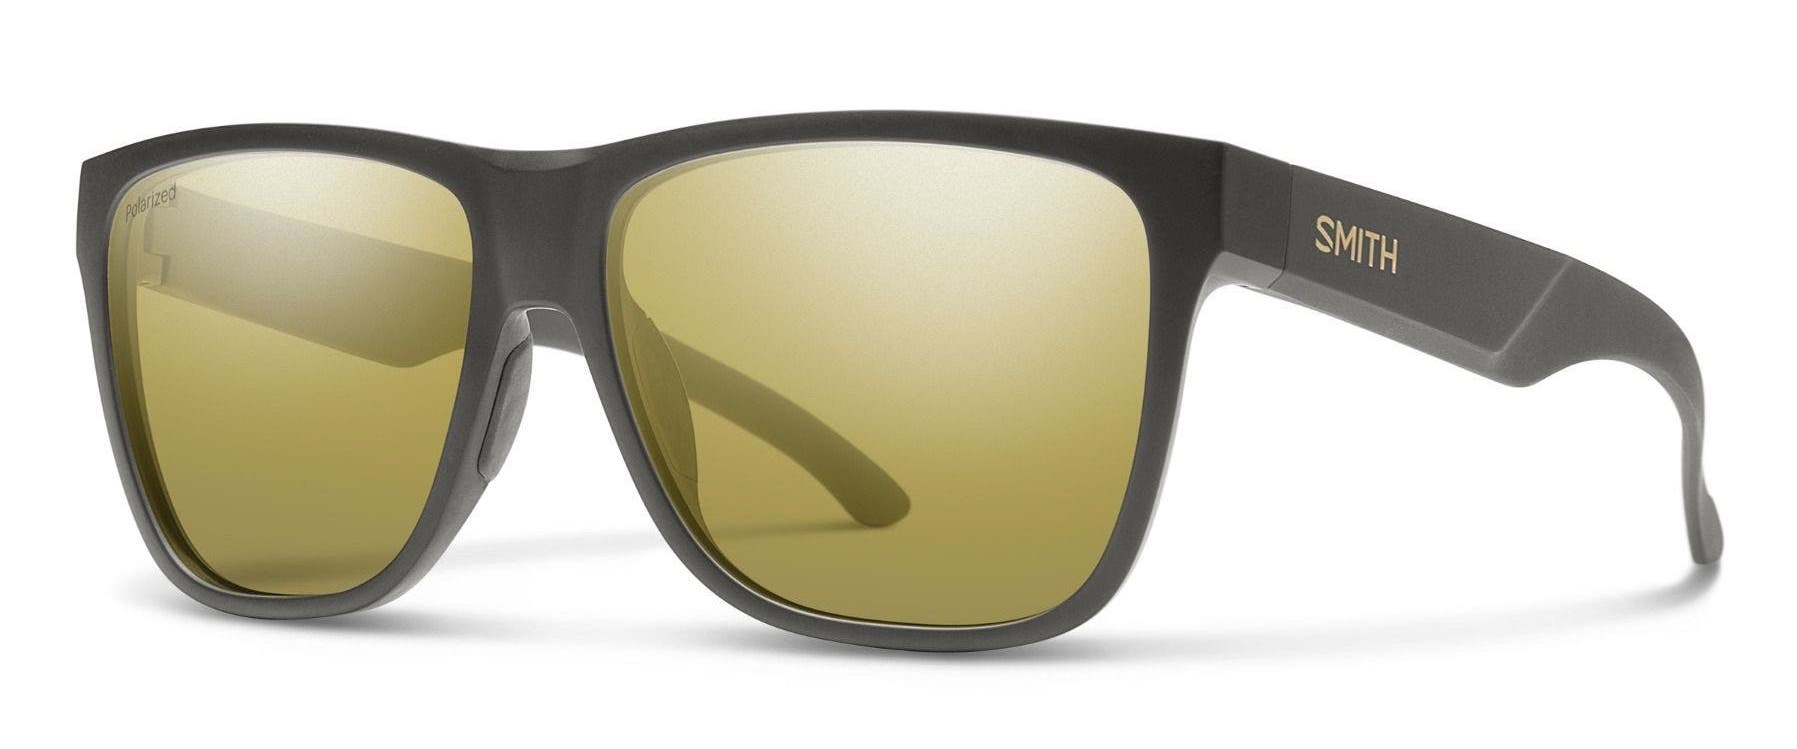 BEST Sunglasses for Big Heads? - Bison Head Sunglasses 